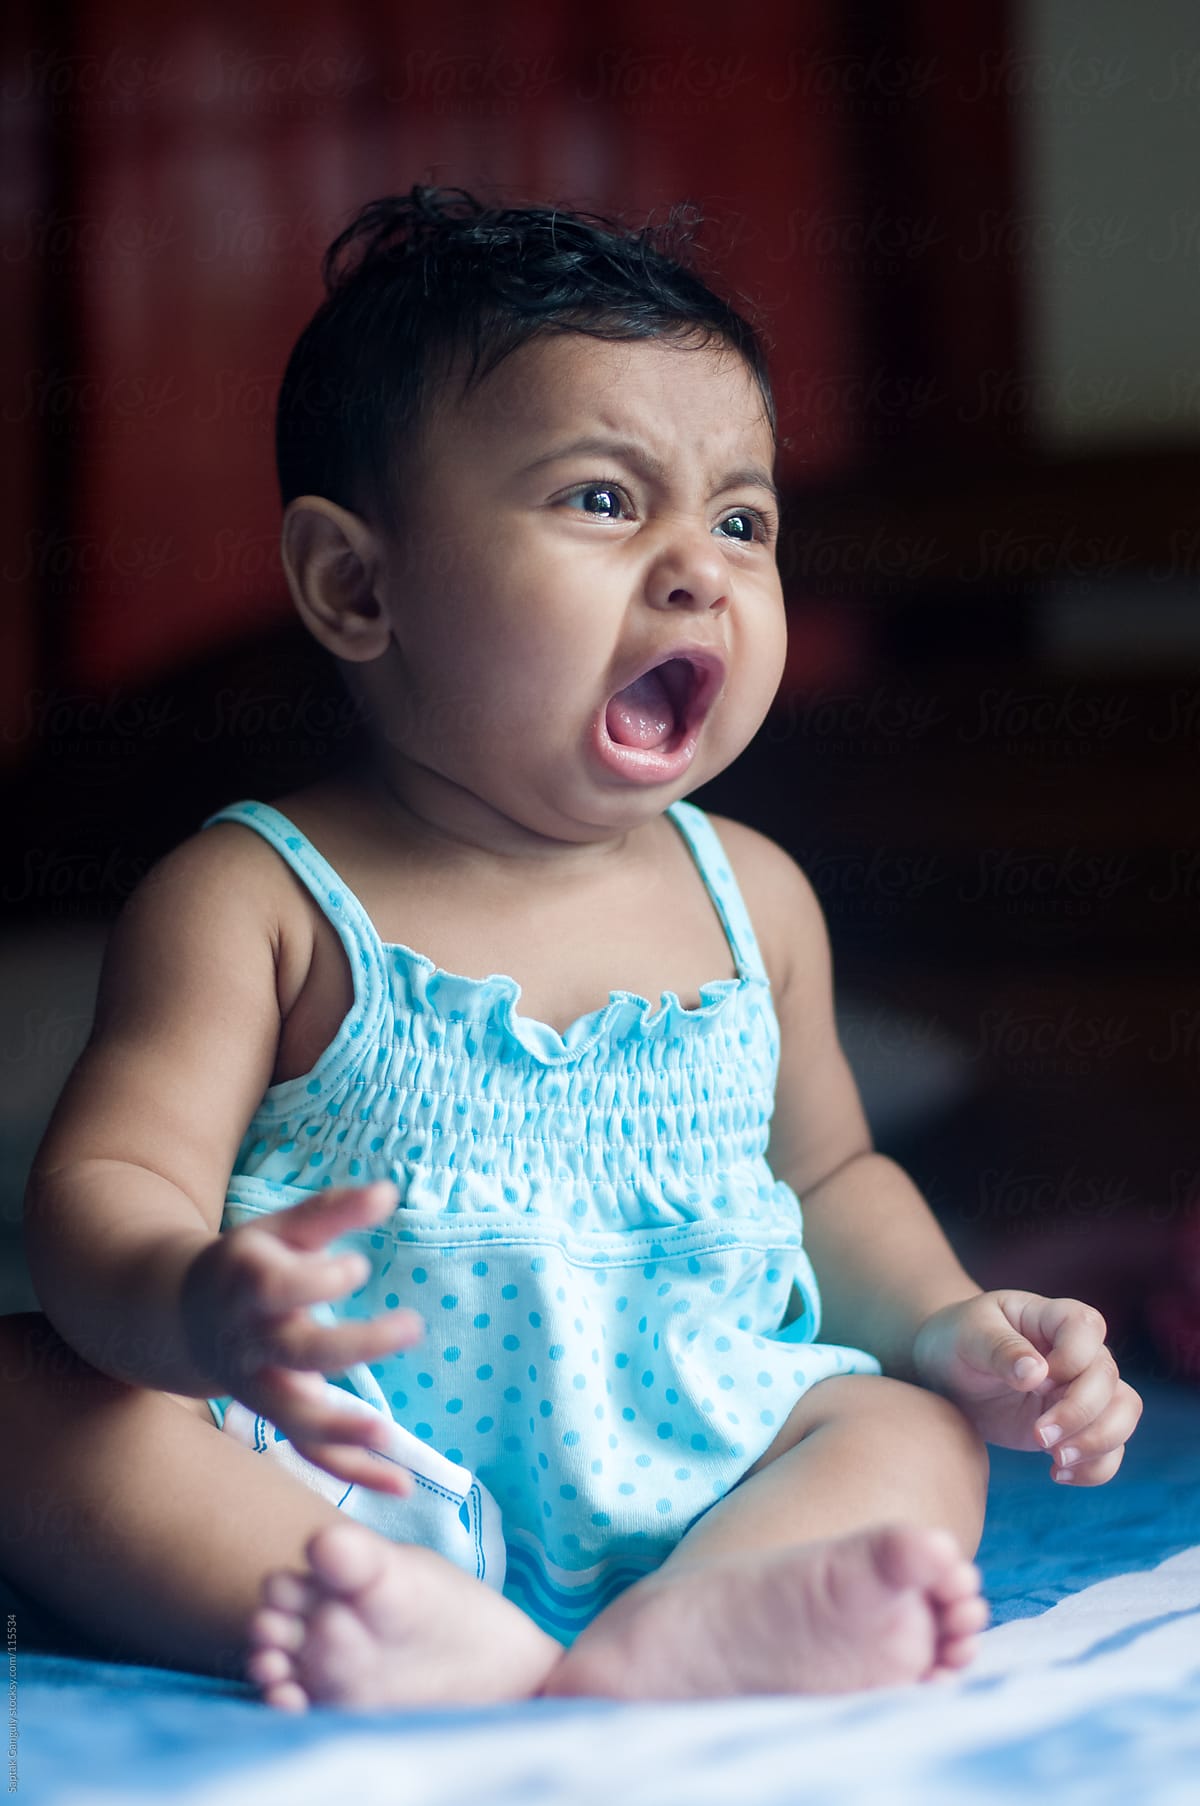 Cute Baby Girl Crying By Stocksy Contributor Saptak Ganguly Stocksy